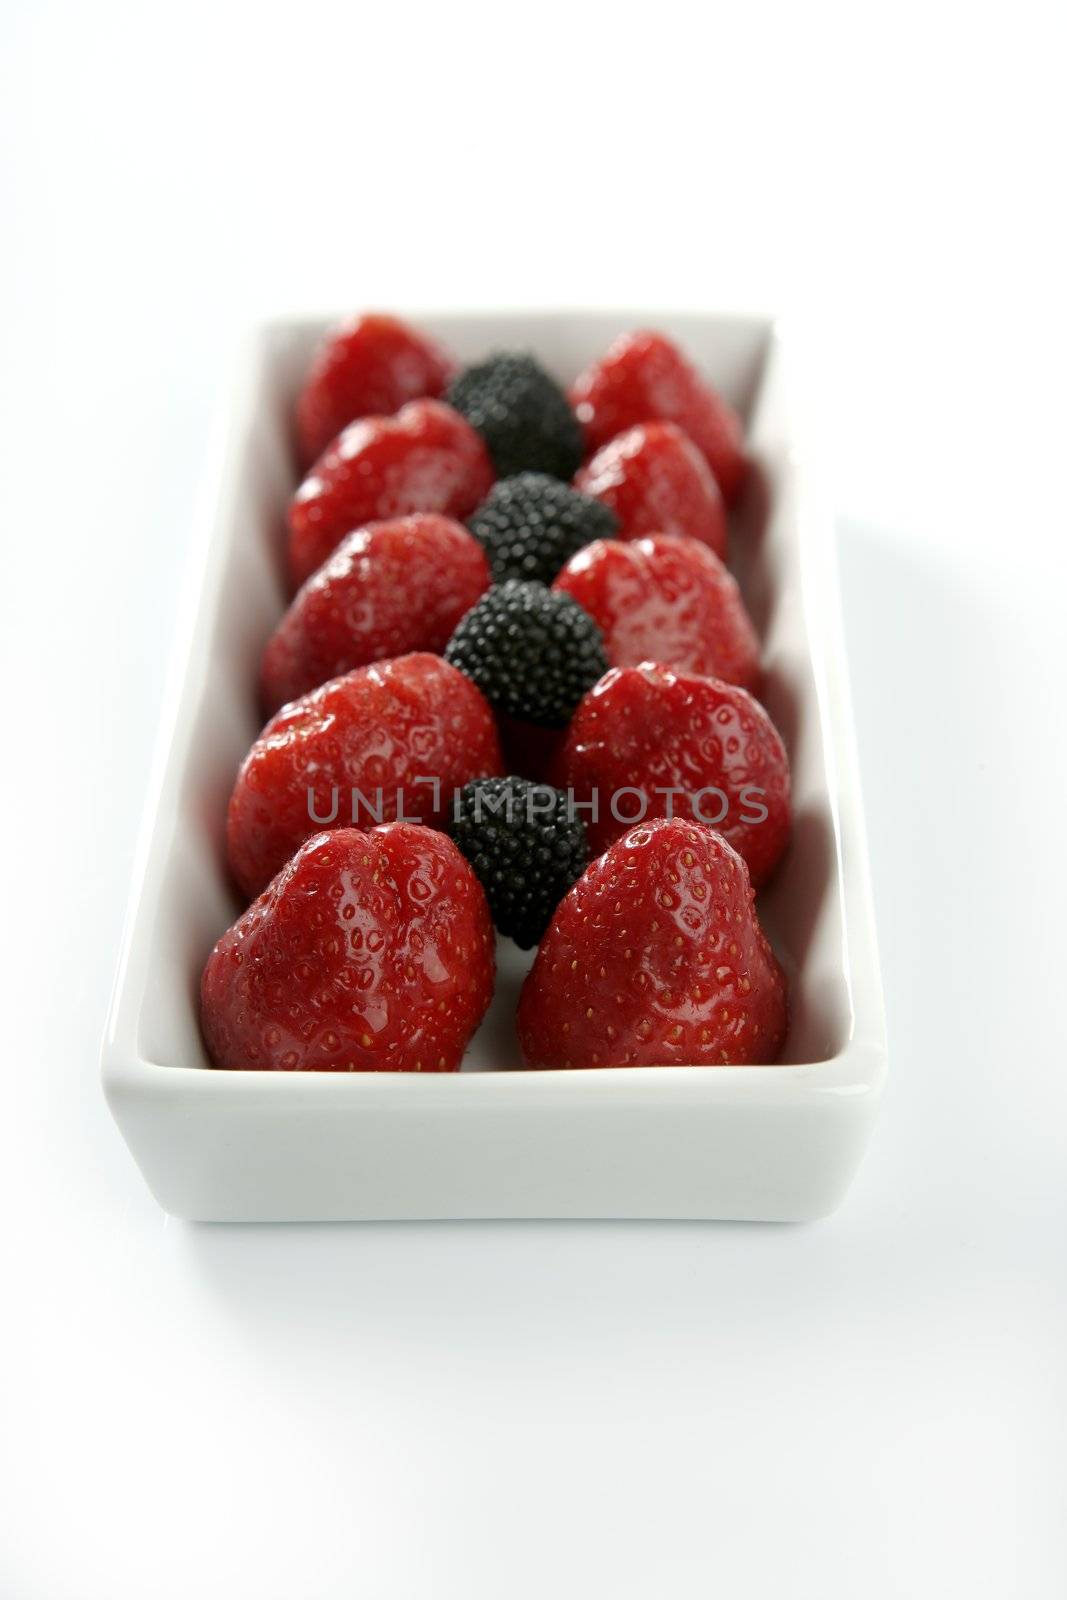 Strawberryes dessert at studio white background